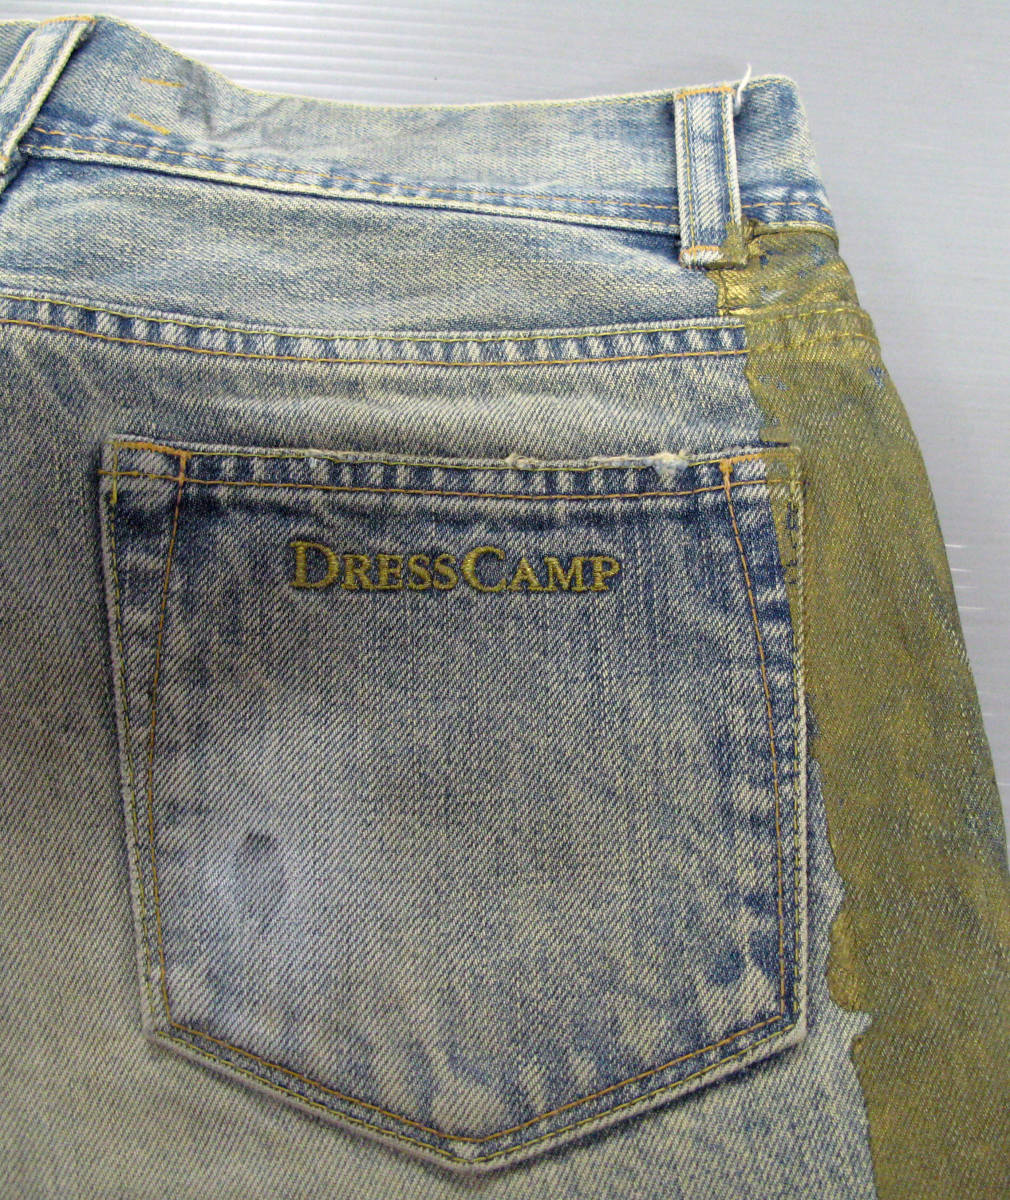  Dress Camp DRESS CAMP: Gold линия Denim 44 ( брюки архив DRESS CAMP GOLD LINE DENIM PANTS 44